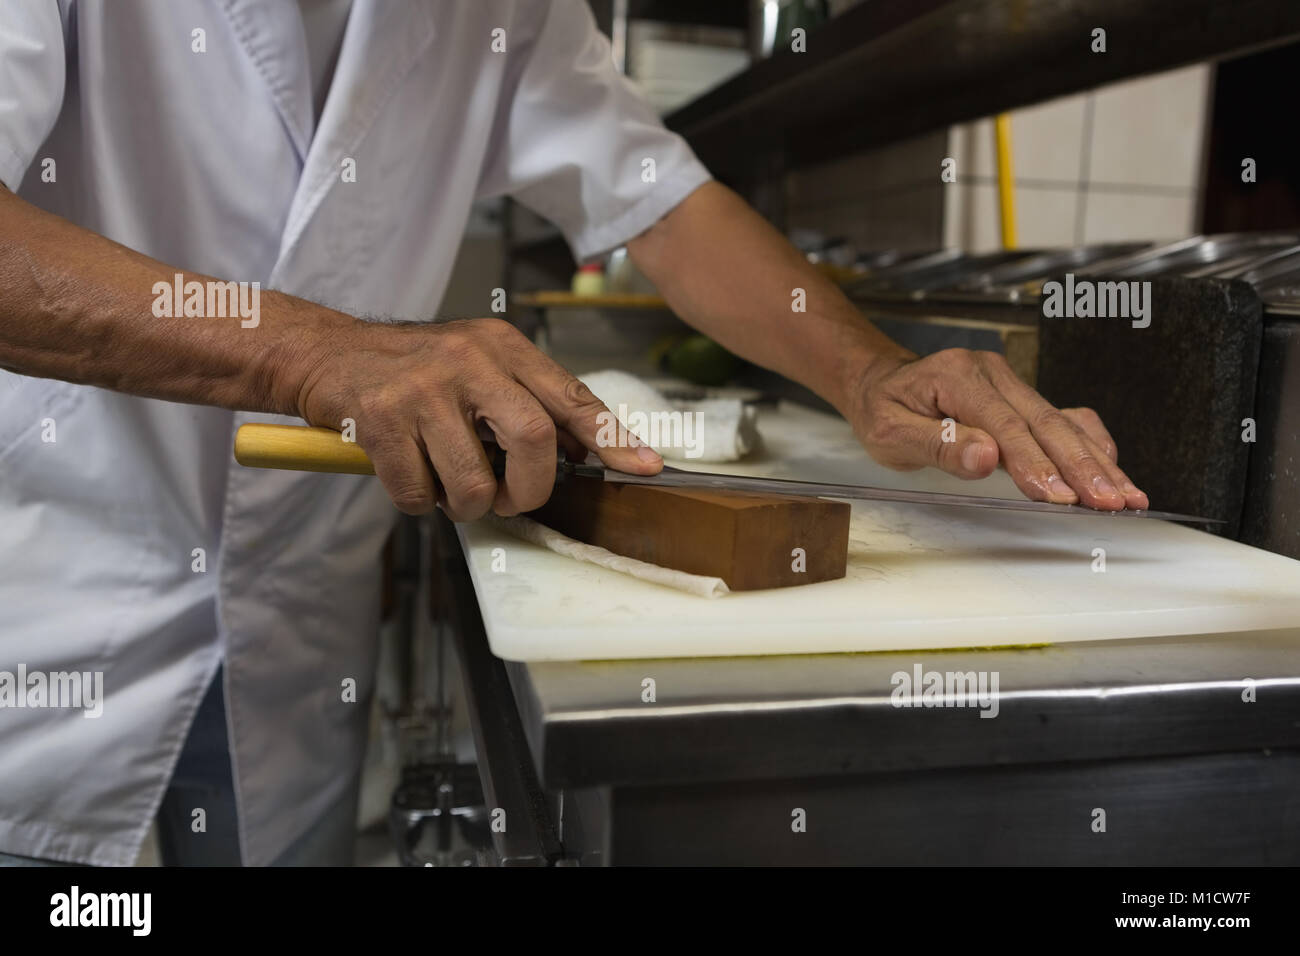 Senior chef holding knife in kitchen Stock Photo